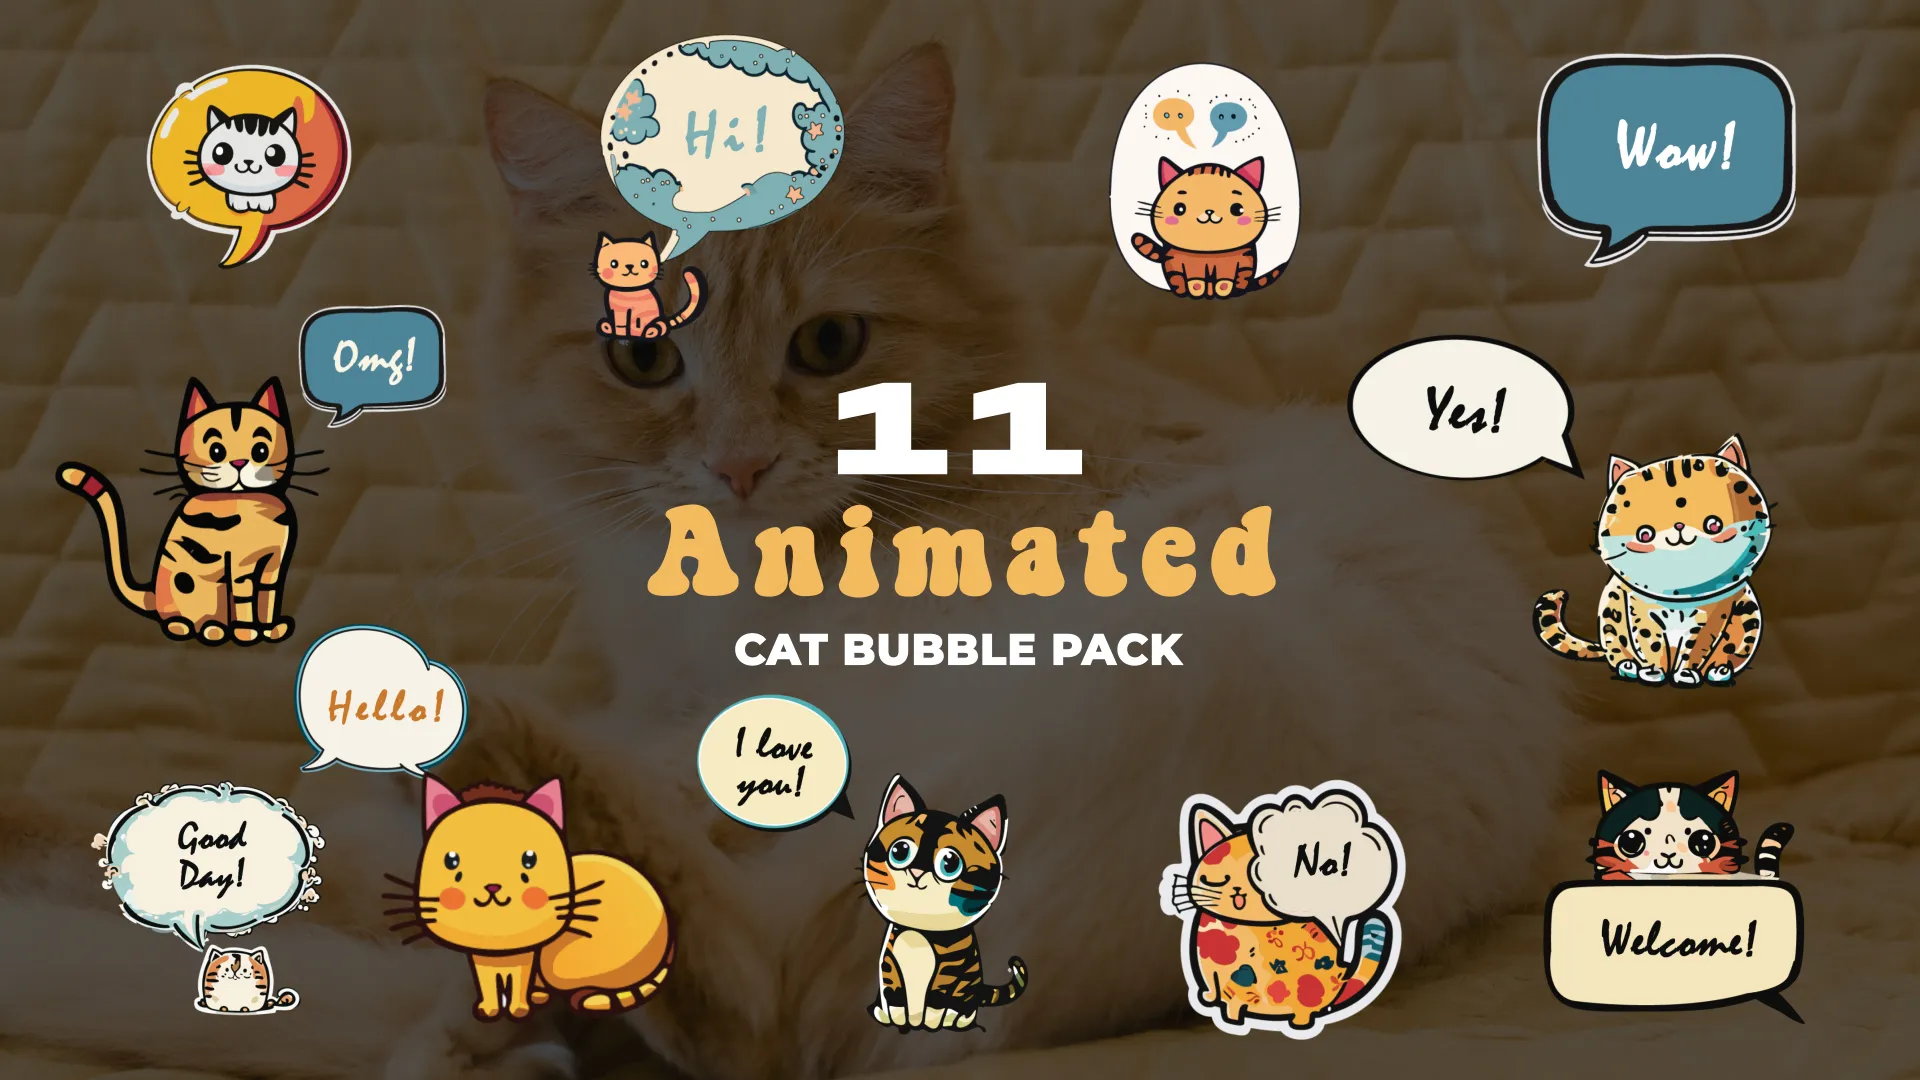 Cute 2D Vector Cat Bubbles Pack Animation Scene